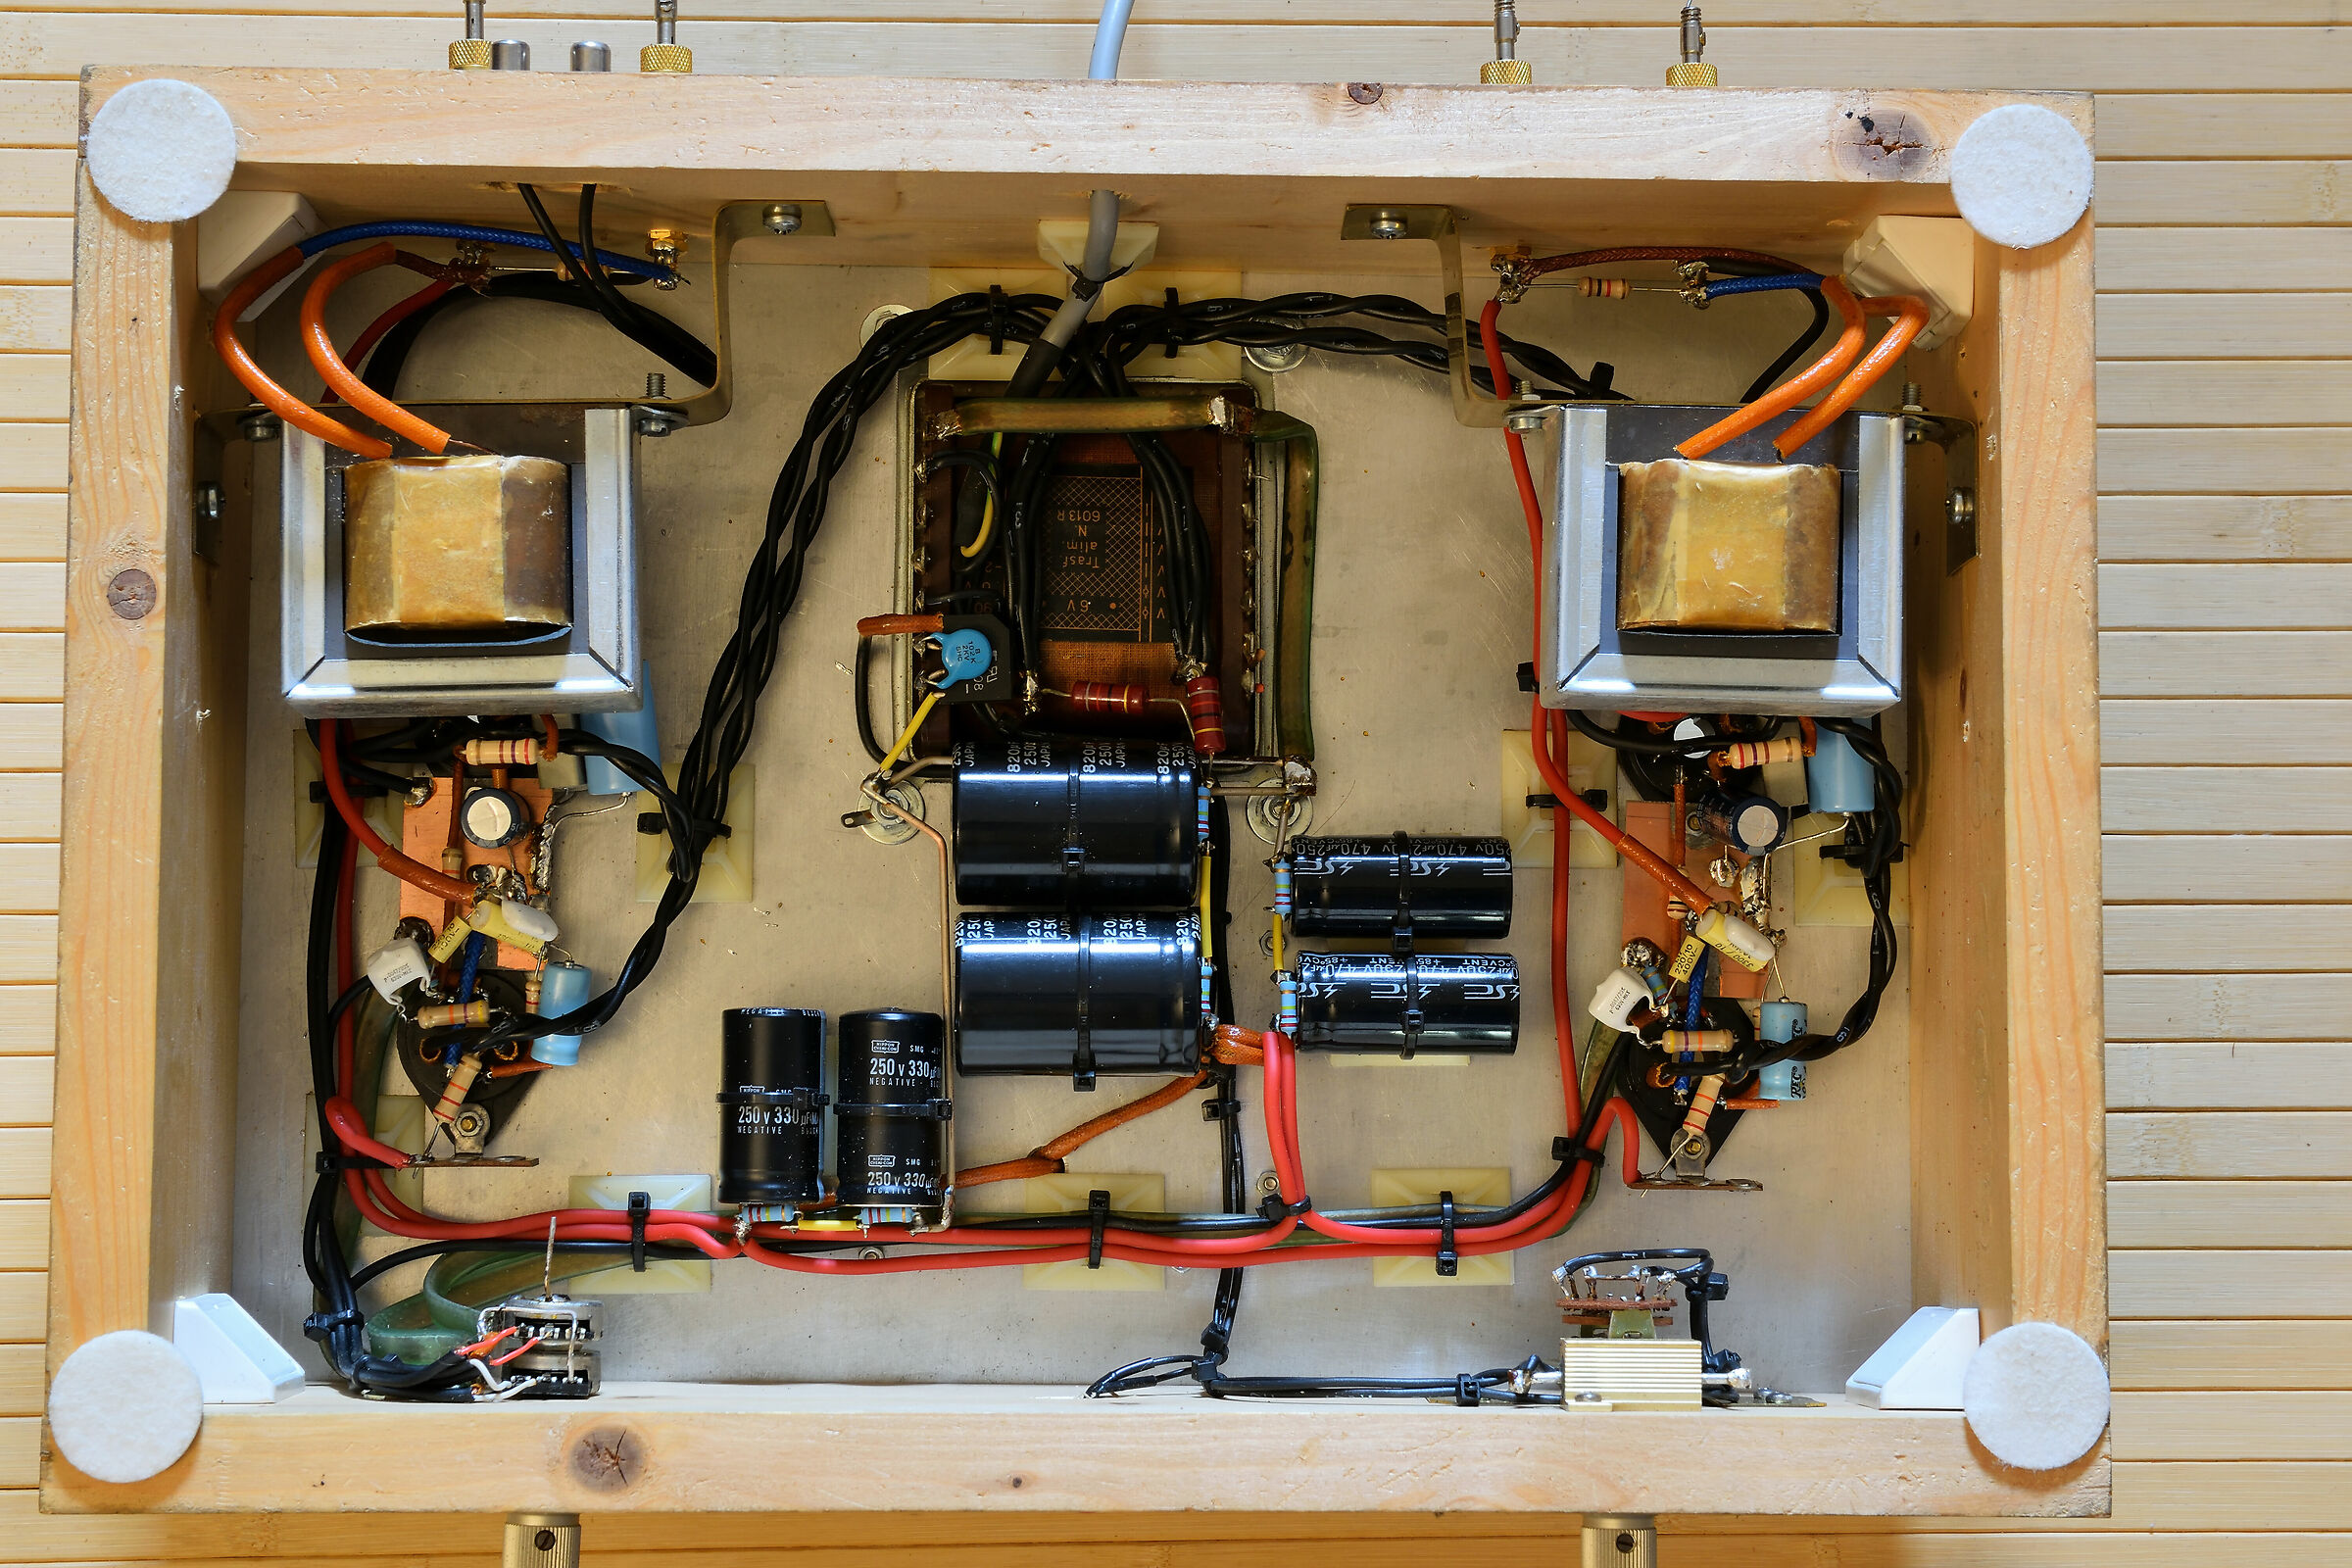 Amplifier kt88 - 6C5 SE (A) - wiring...